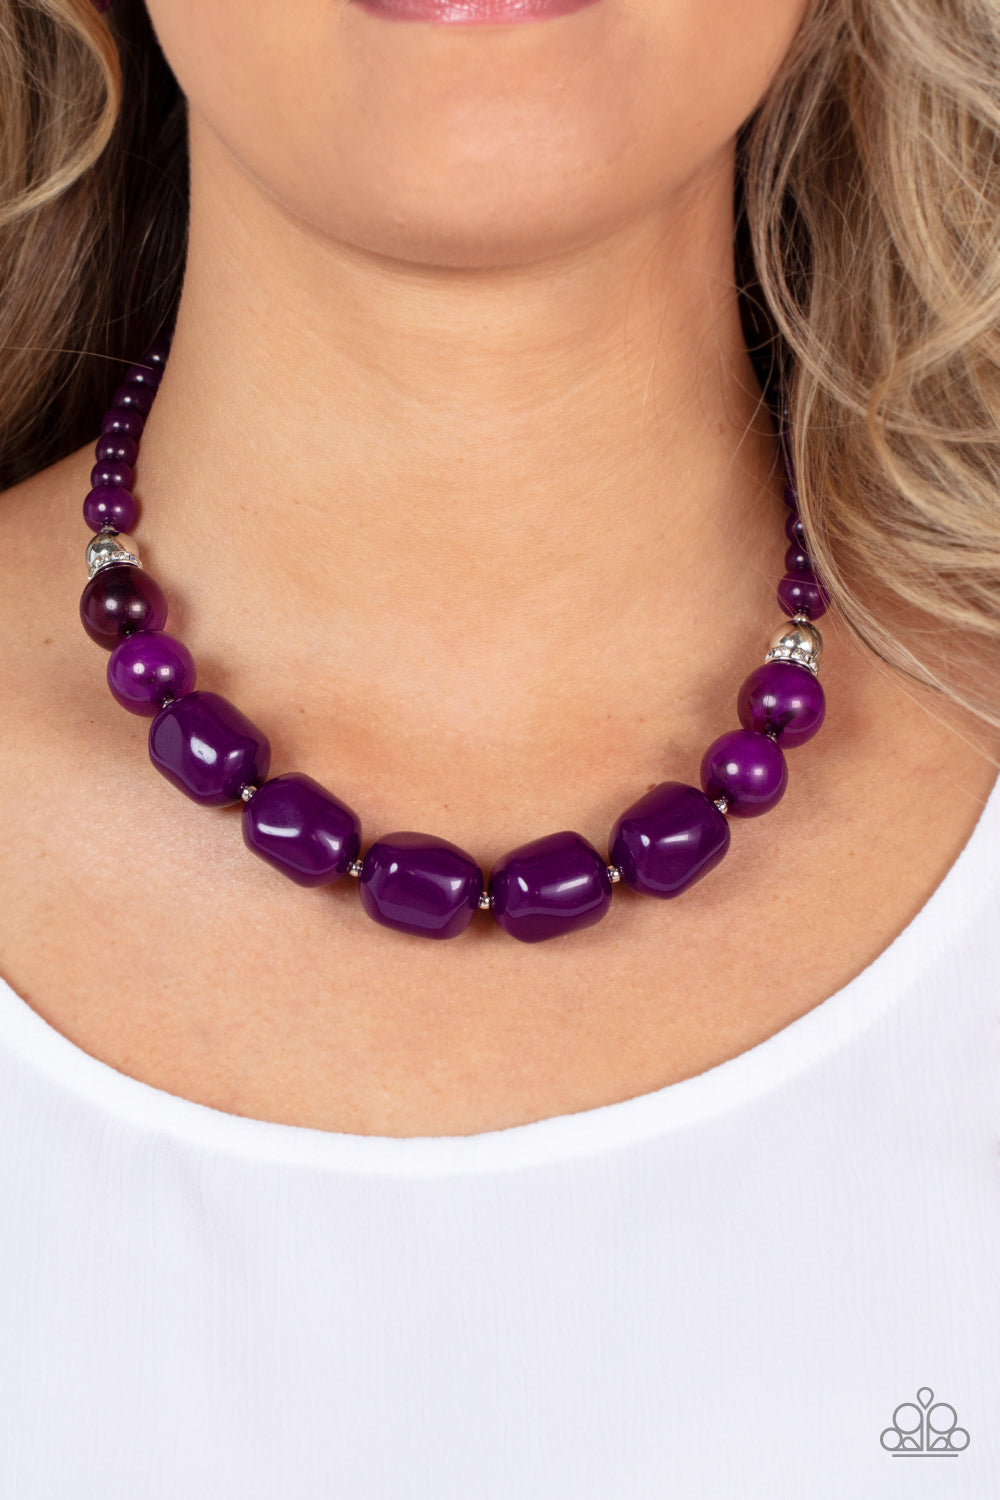 Ten Paparazzi “Out of TENACIOUS” Purple - Necklace Earring Set